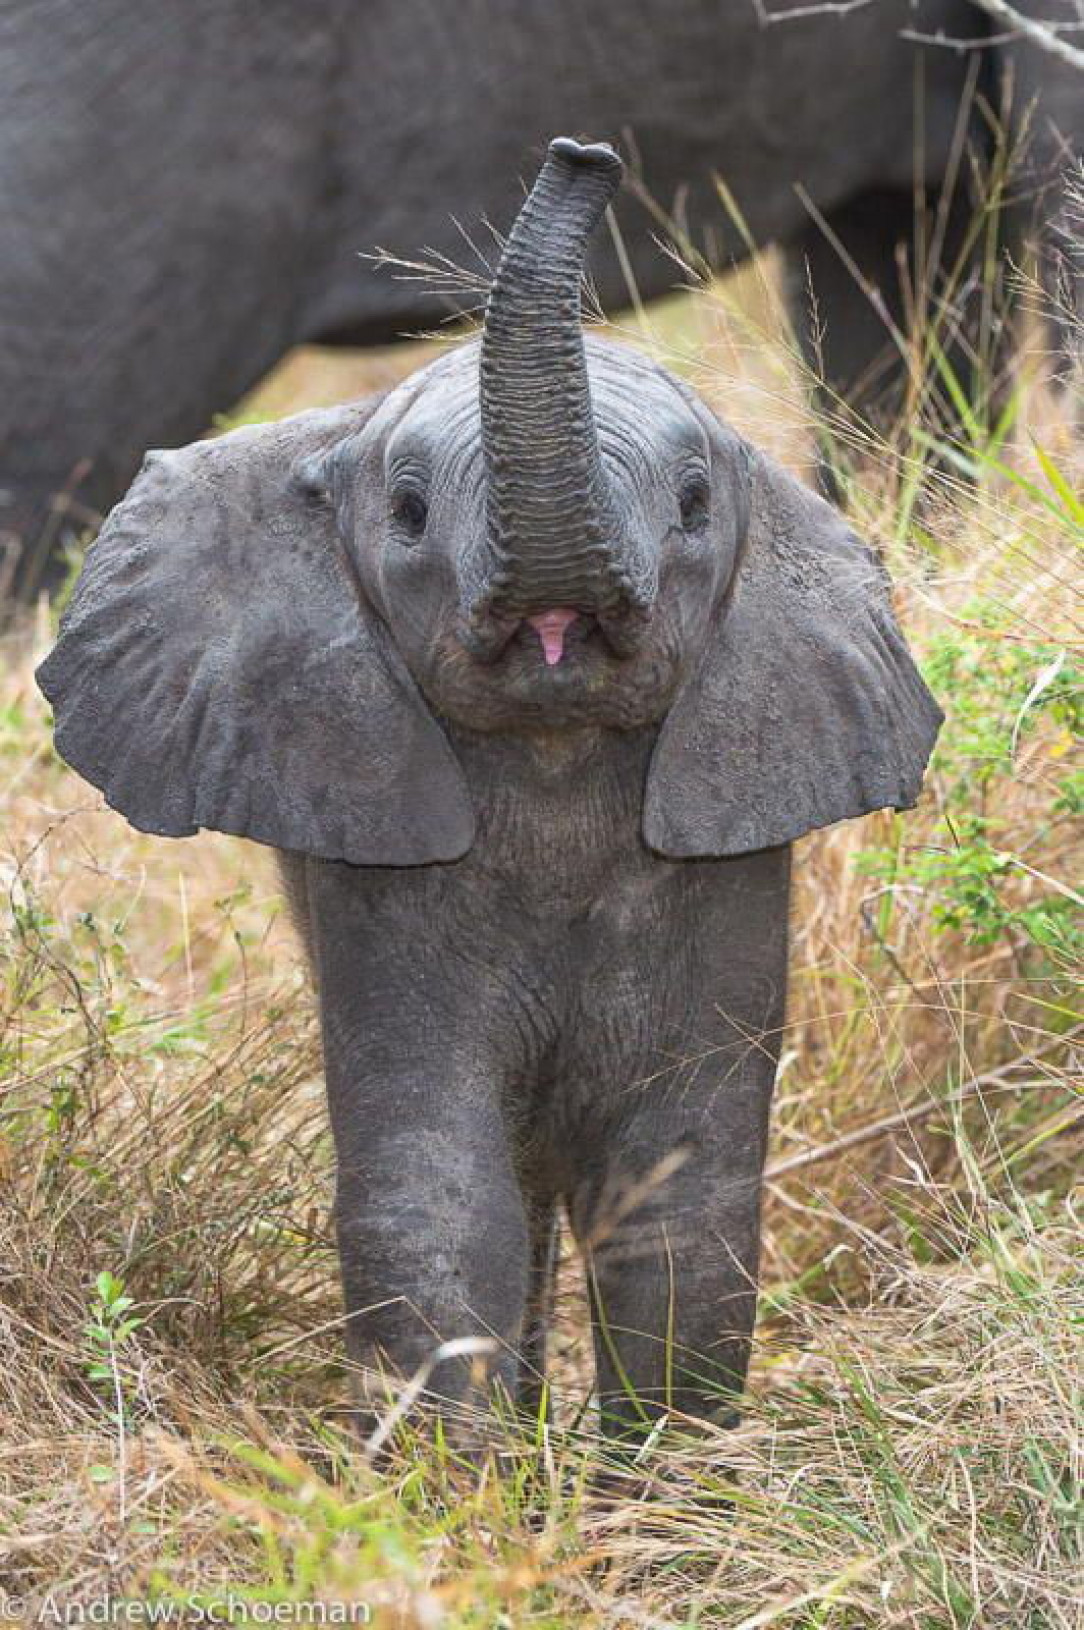 Adorable Baby Elephant ❤️